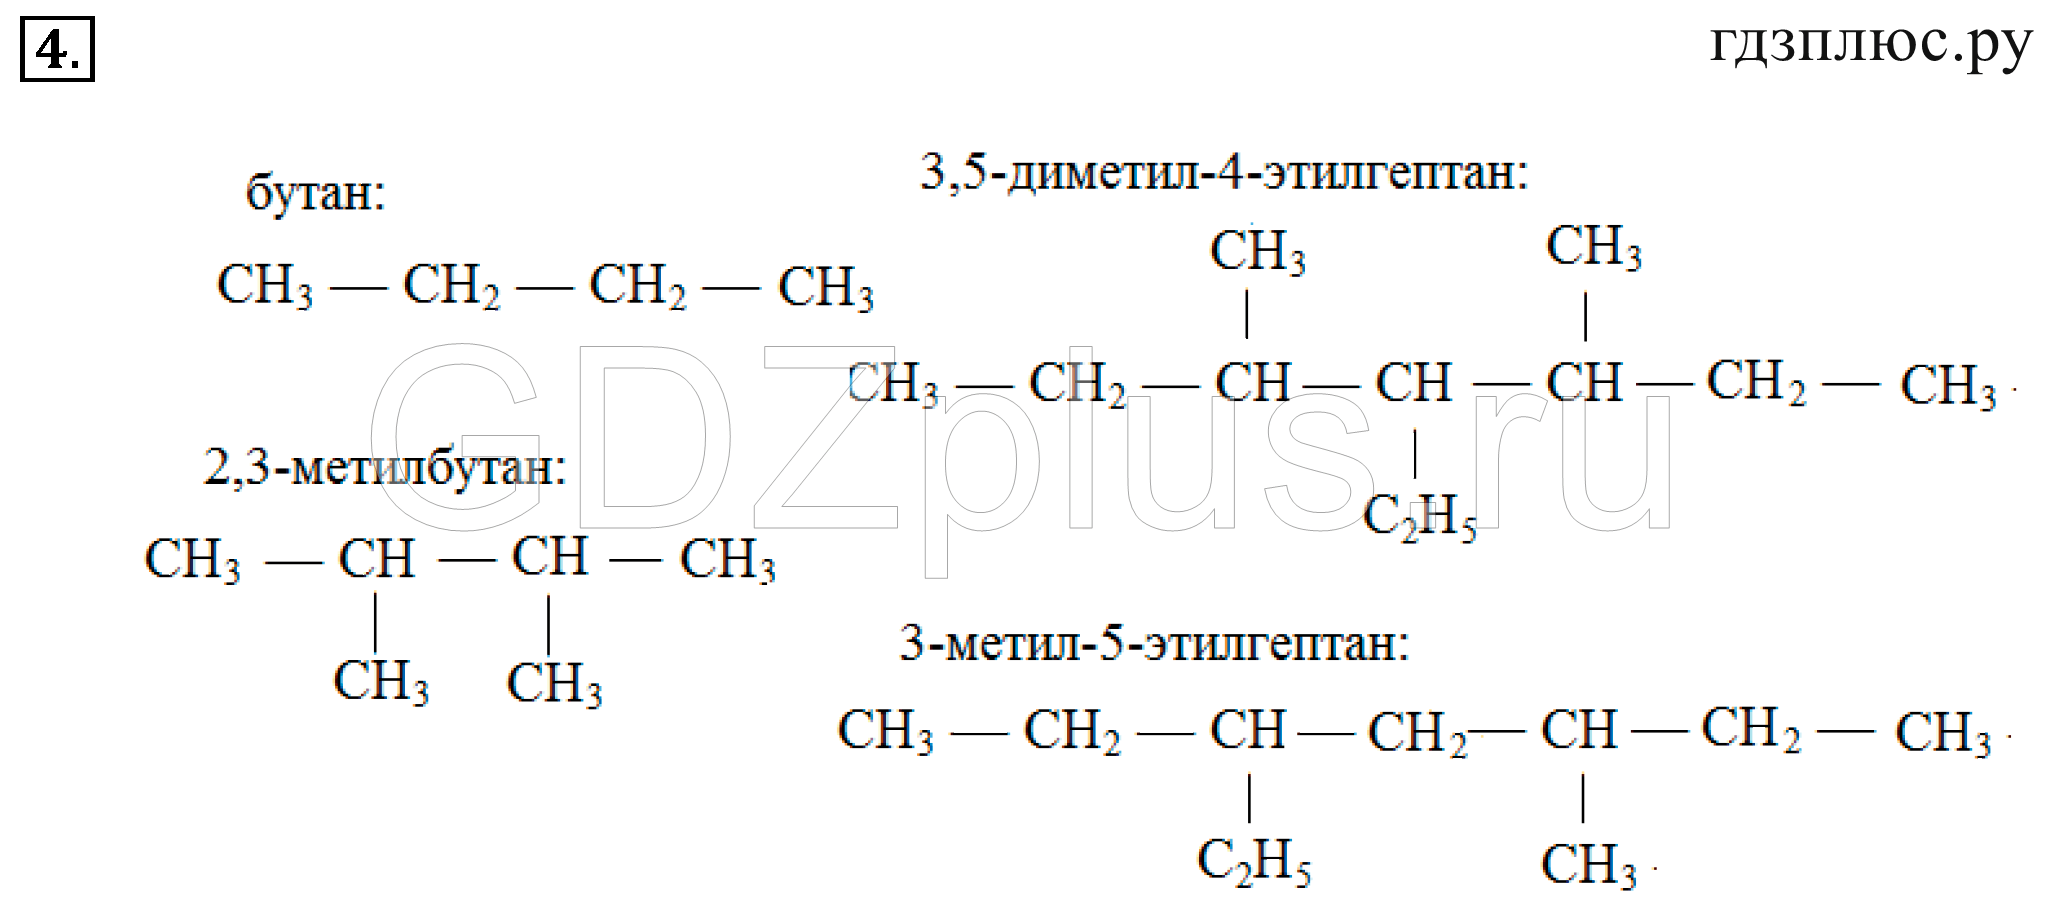 Этил гептан. 3,5 Диметил 4-эпилгептана. 2 Метил 3 этилгептан. Структура формулы 3 этилгептан. 3 Метил 5 этилгептан.